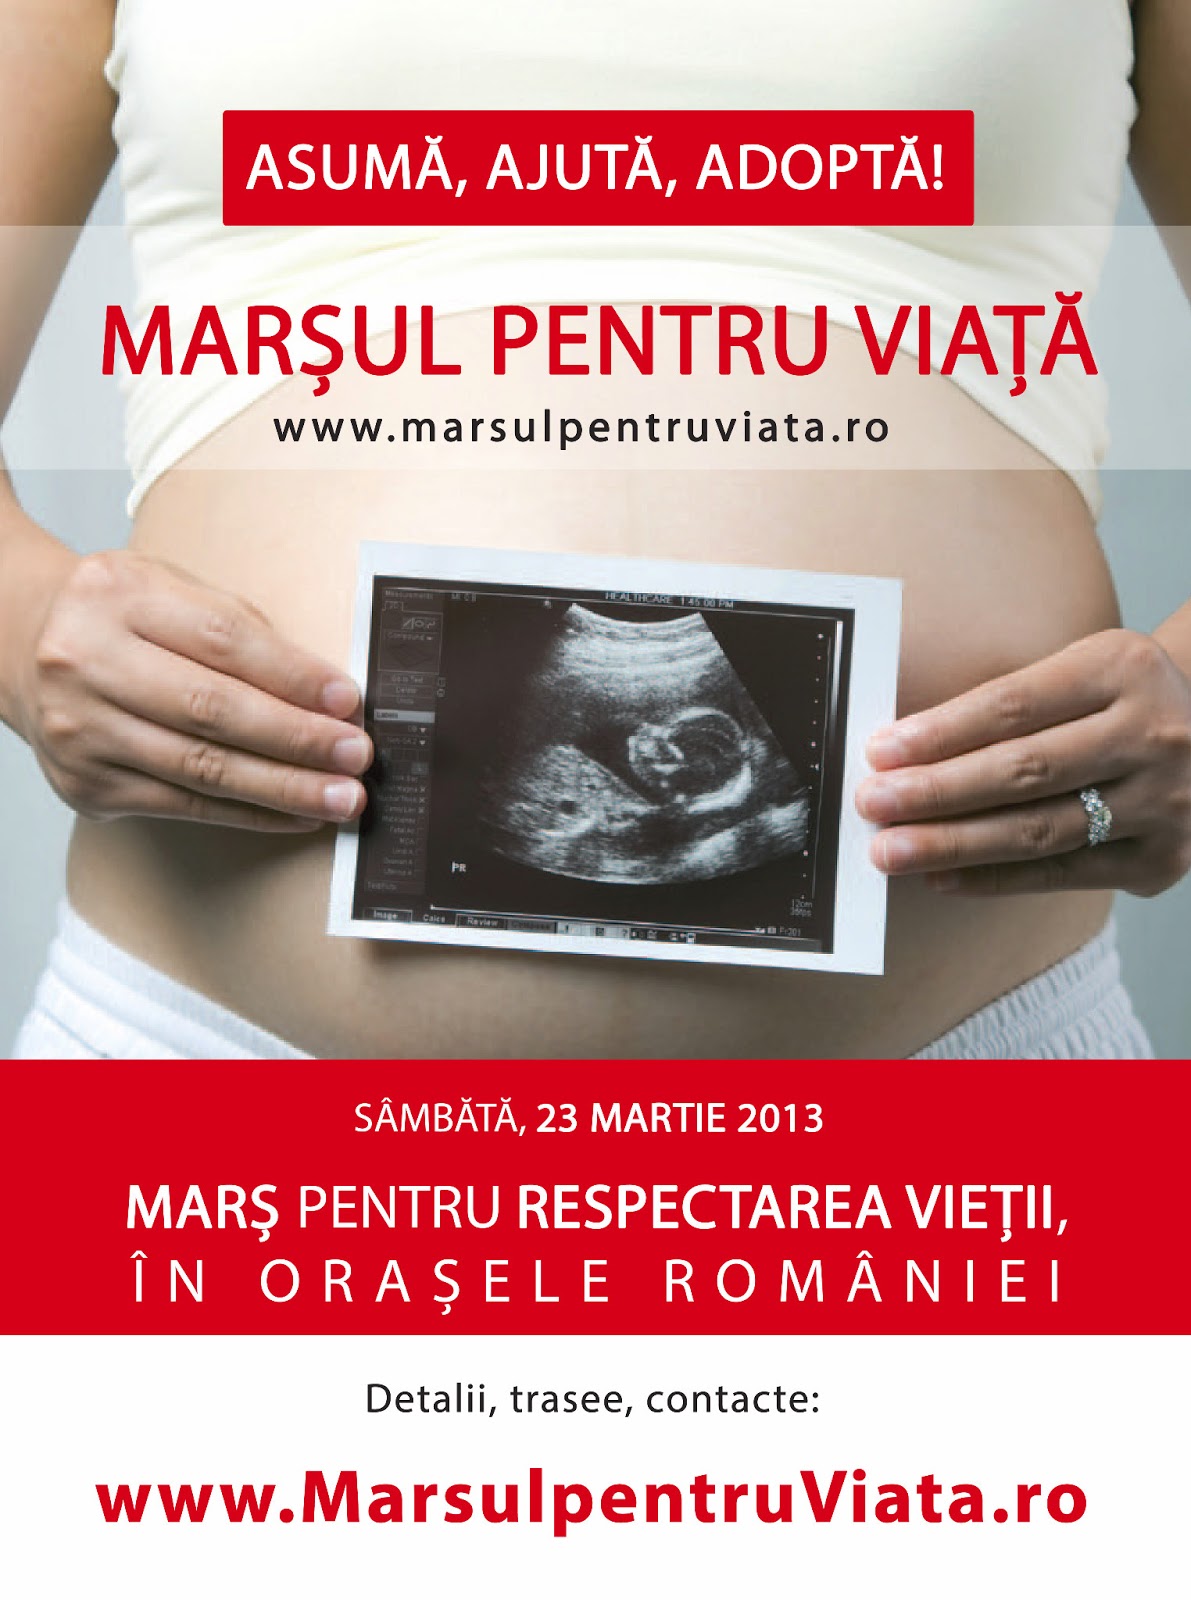 Asuma, ajuta, adopta! - MARSUL PENTRU VIATA - Vino pe 23 martie la marsul 2013 pentru Viata! - MARS PENTRU RESPECTAREA VIETII IN ORASELE ROMANIEI